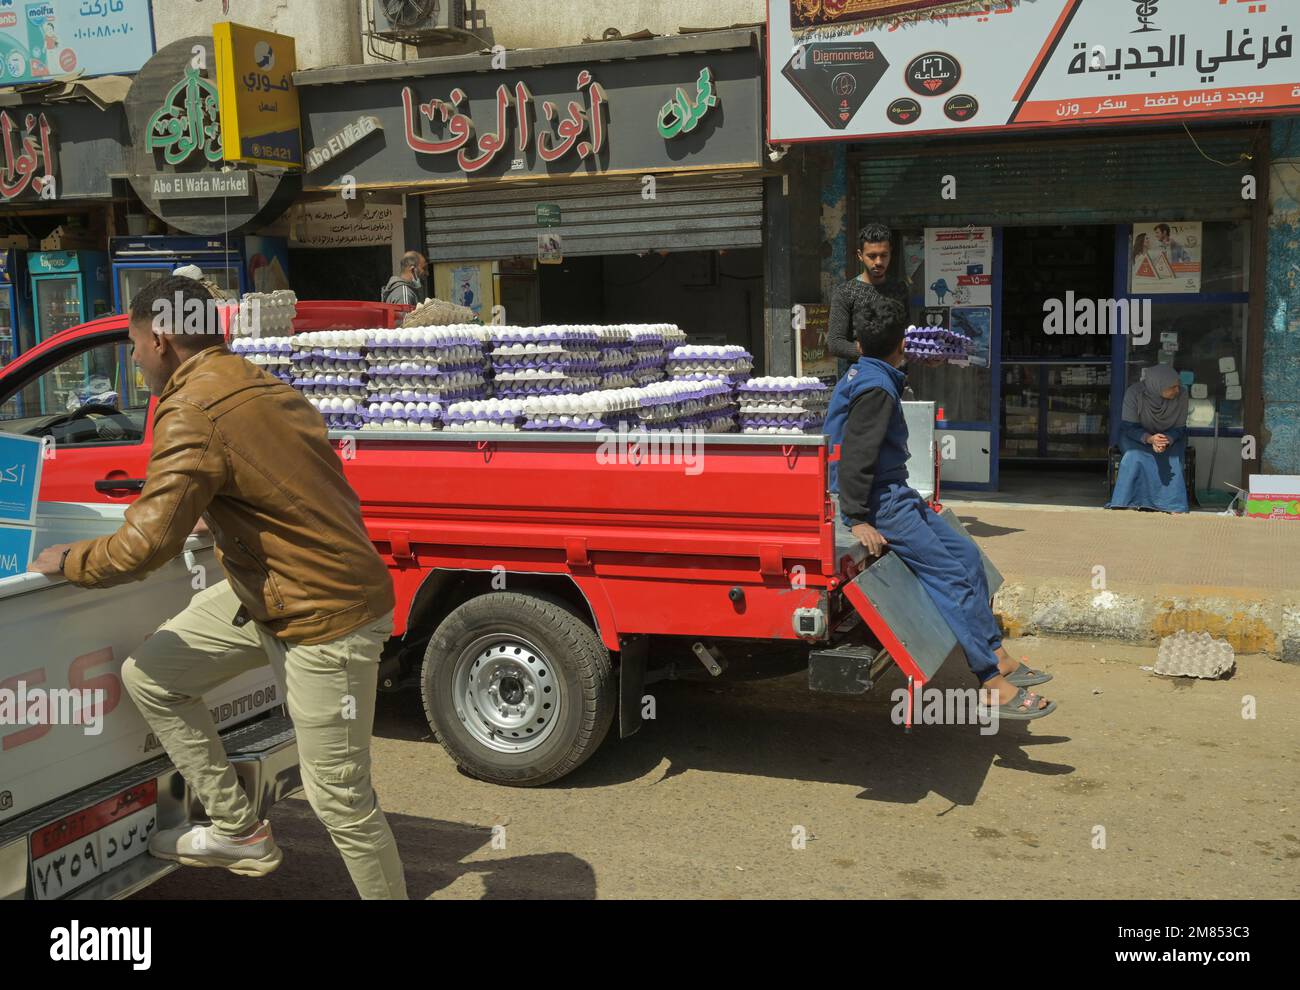 Straßenszene, Handel, Eier, Transport, Qina, Ägypten Stock Photo